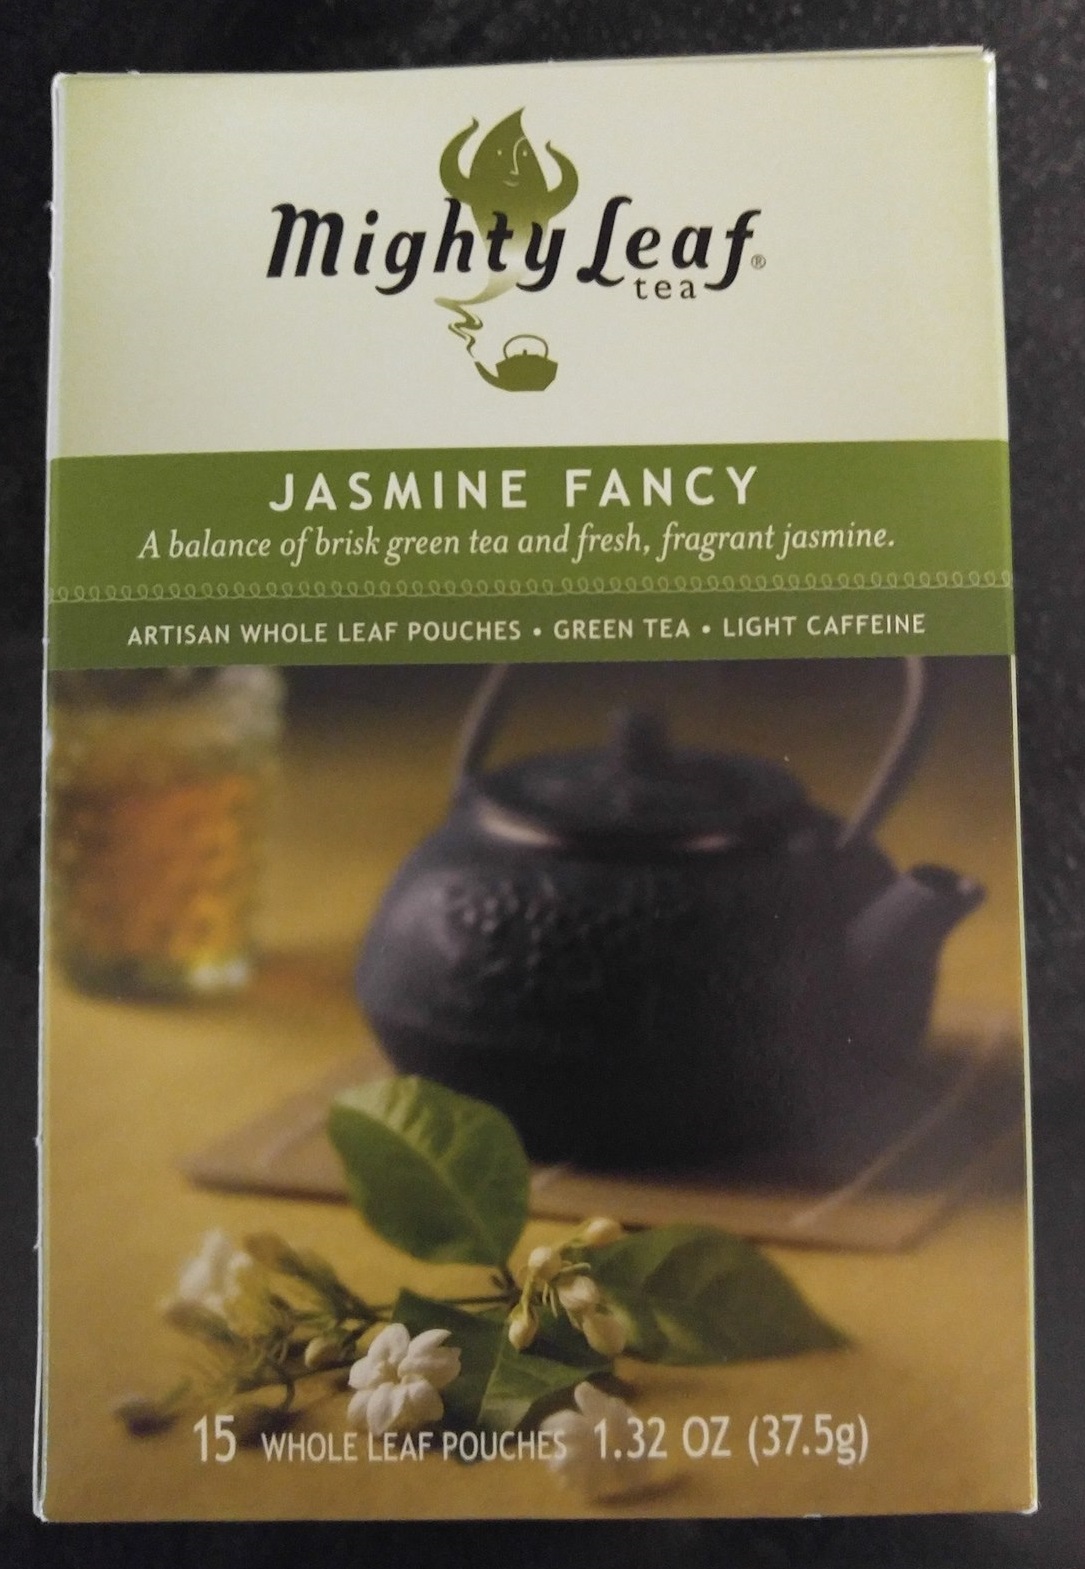 A Geek Girls Take! [Tea Review] Mighty Leaf Tea "Jasmine Fancy" Green Tea